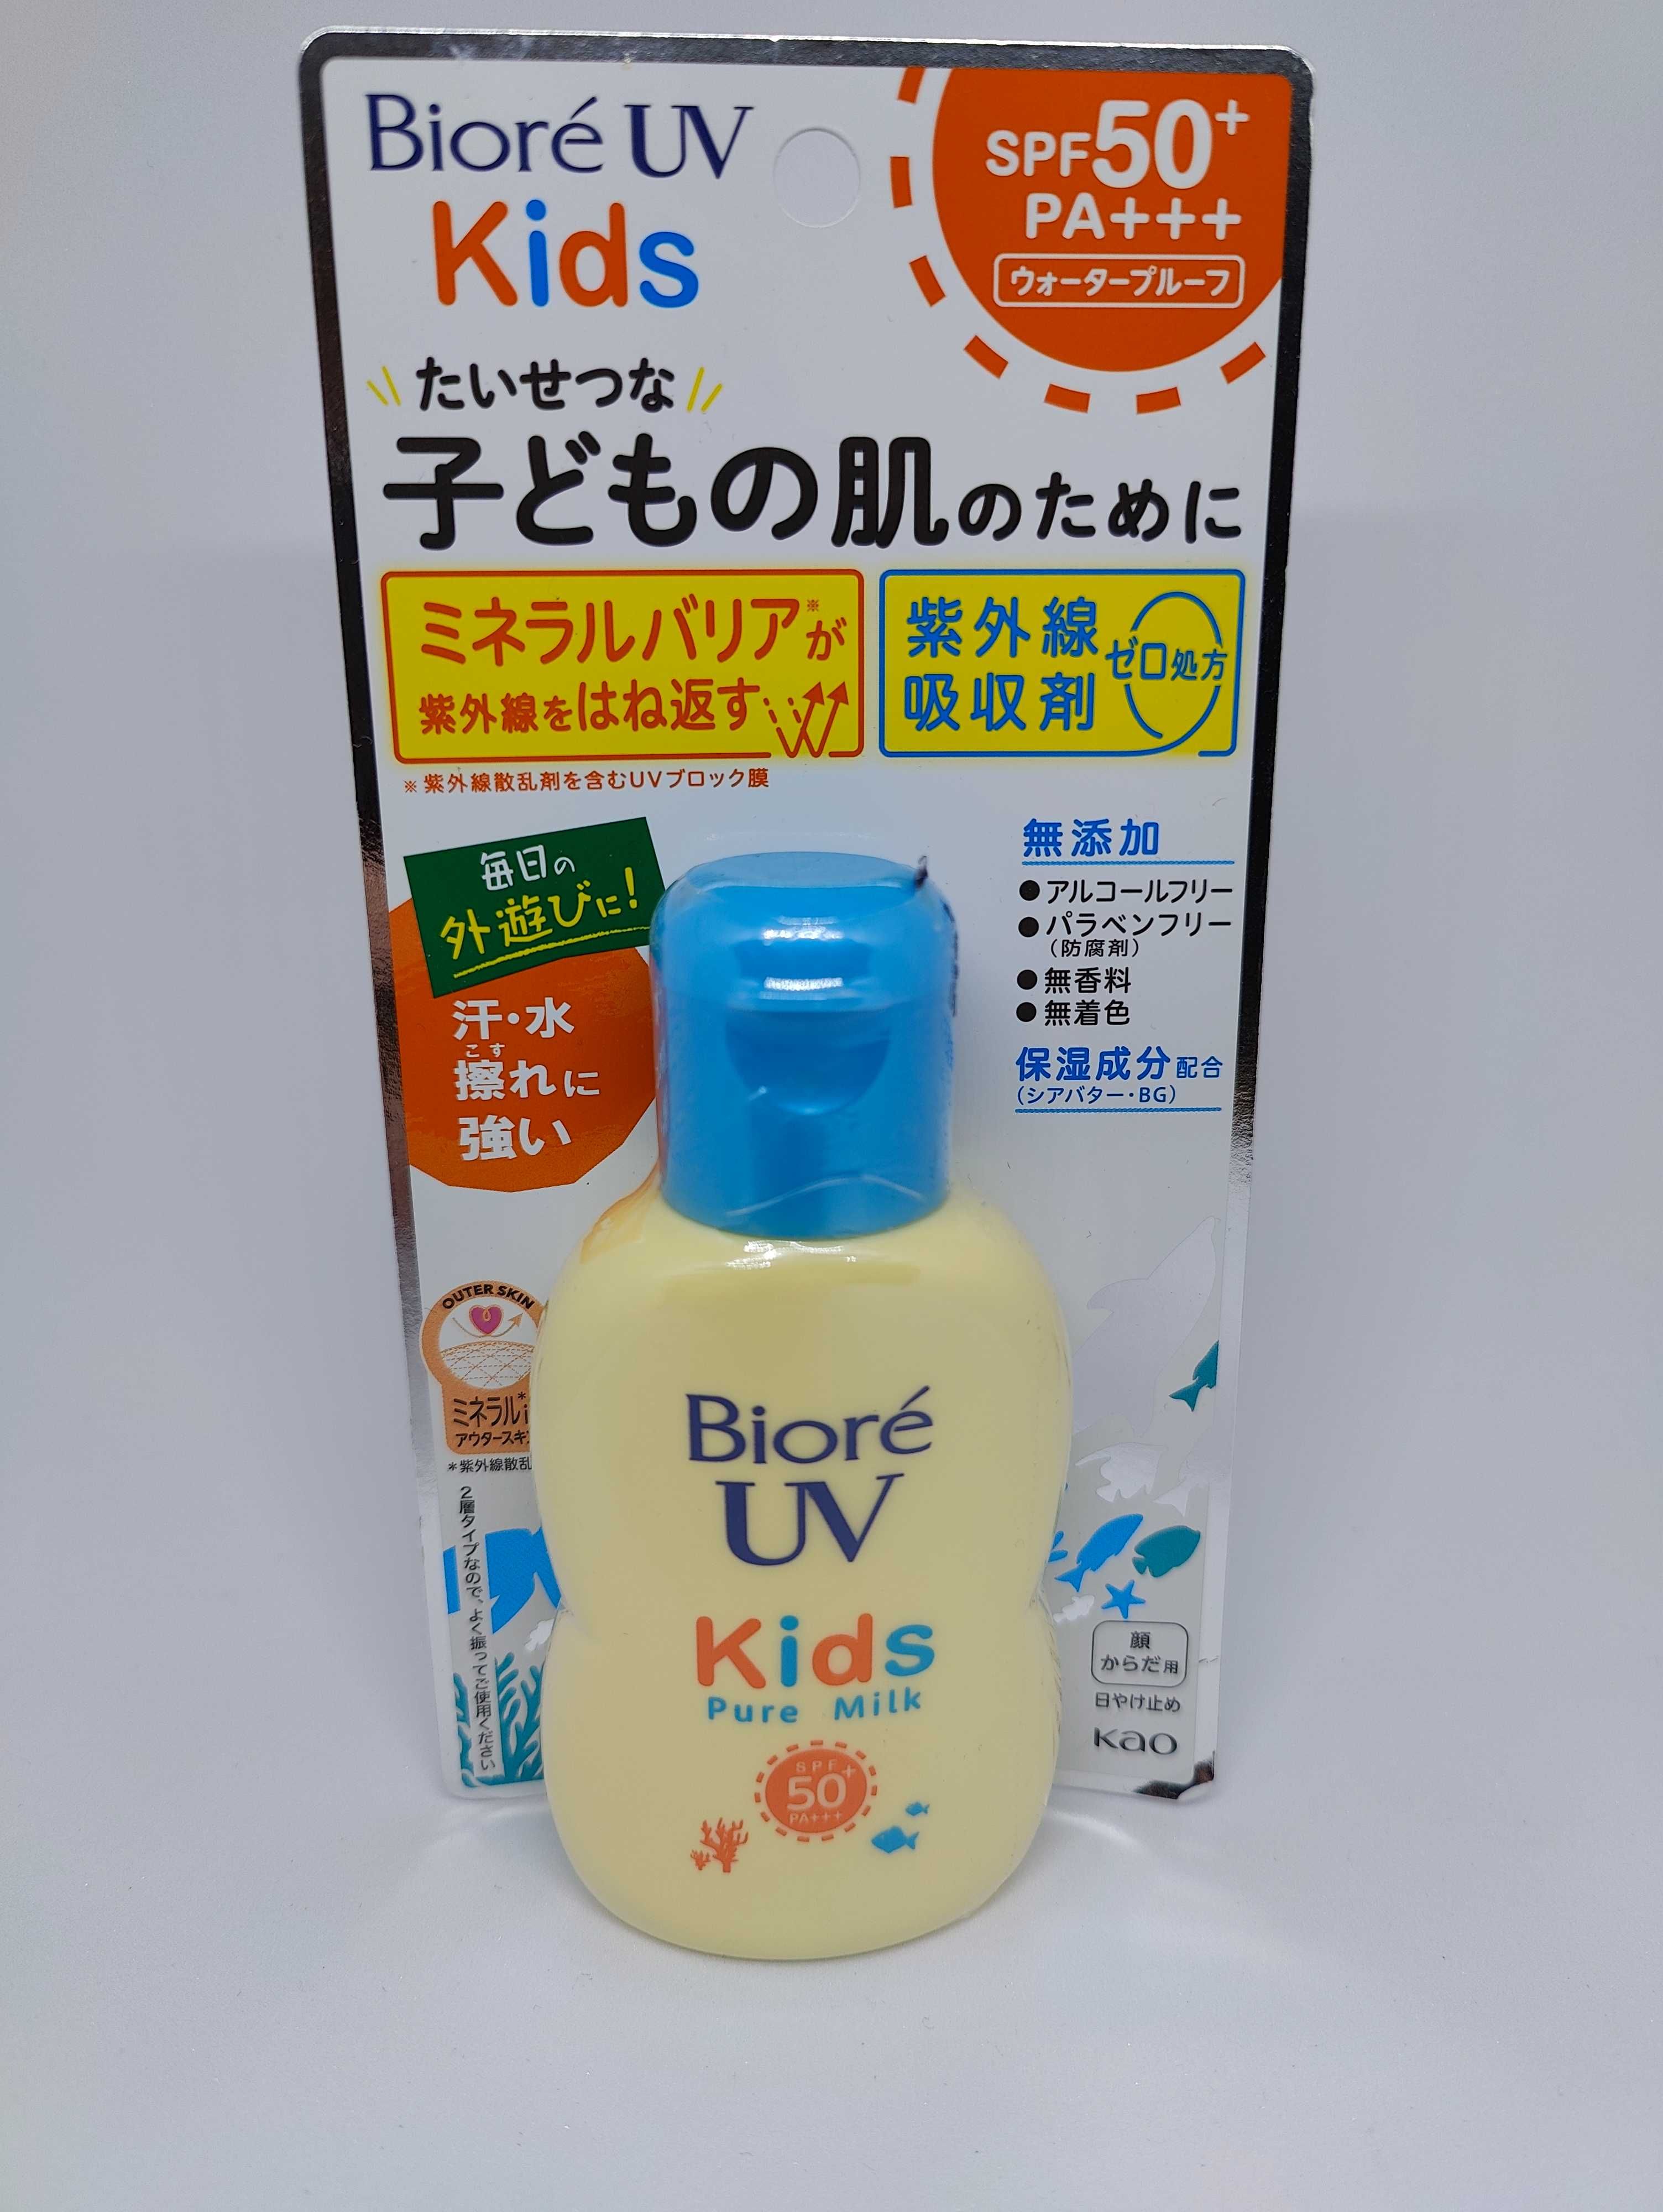 Biore UV Kids Pure Milk Sunscreen SPF50 70ml